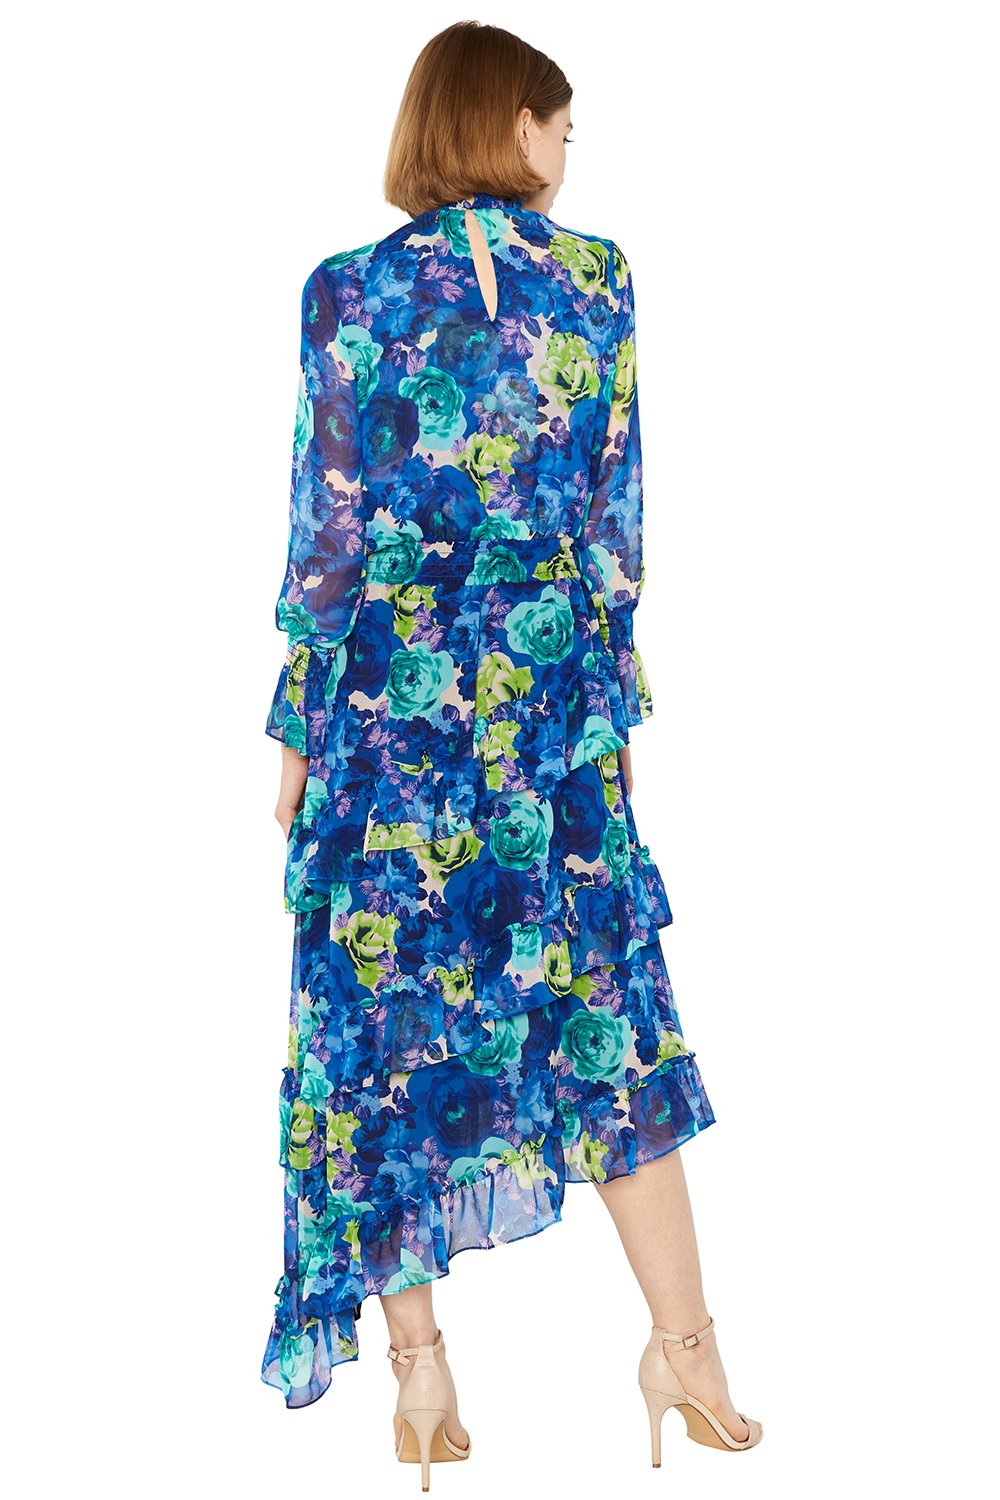 MISA - Rania Dress in Blue Multi